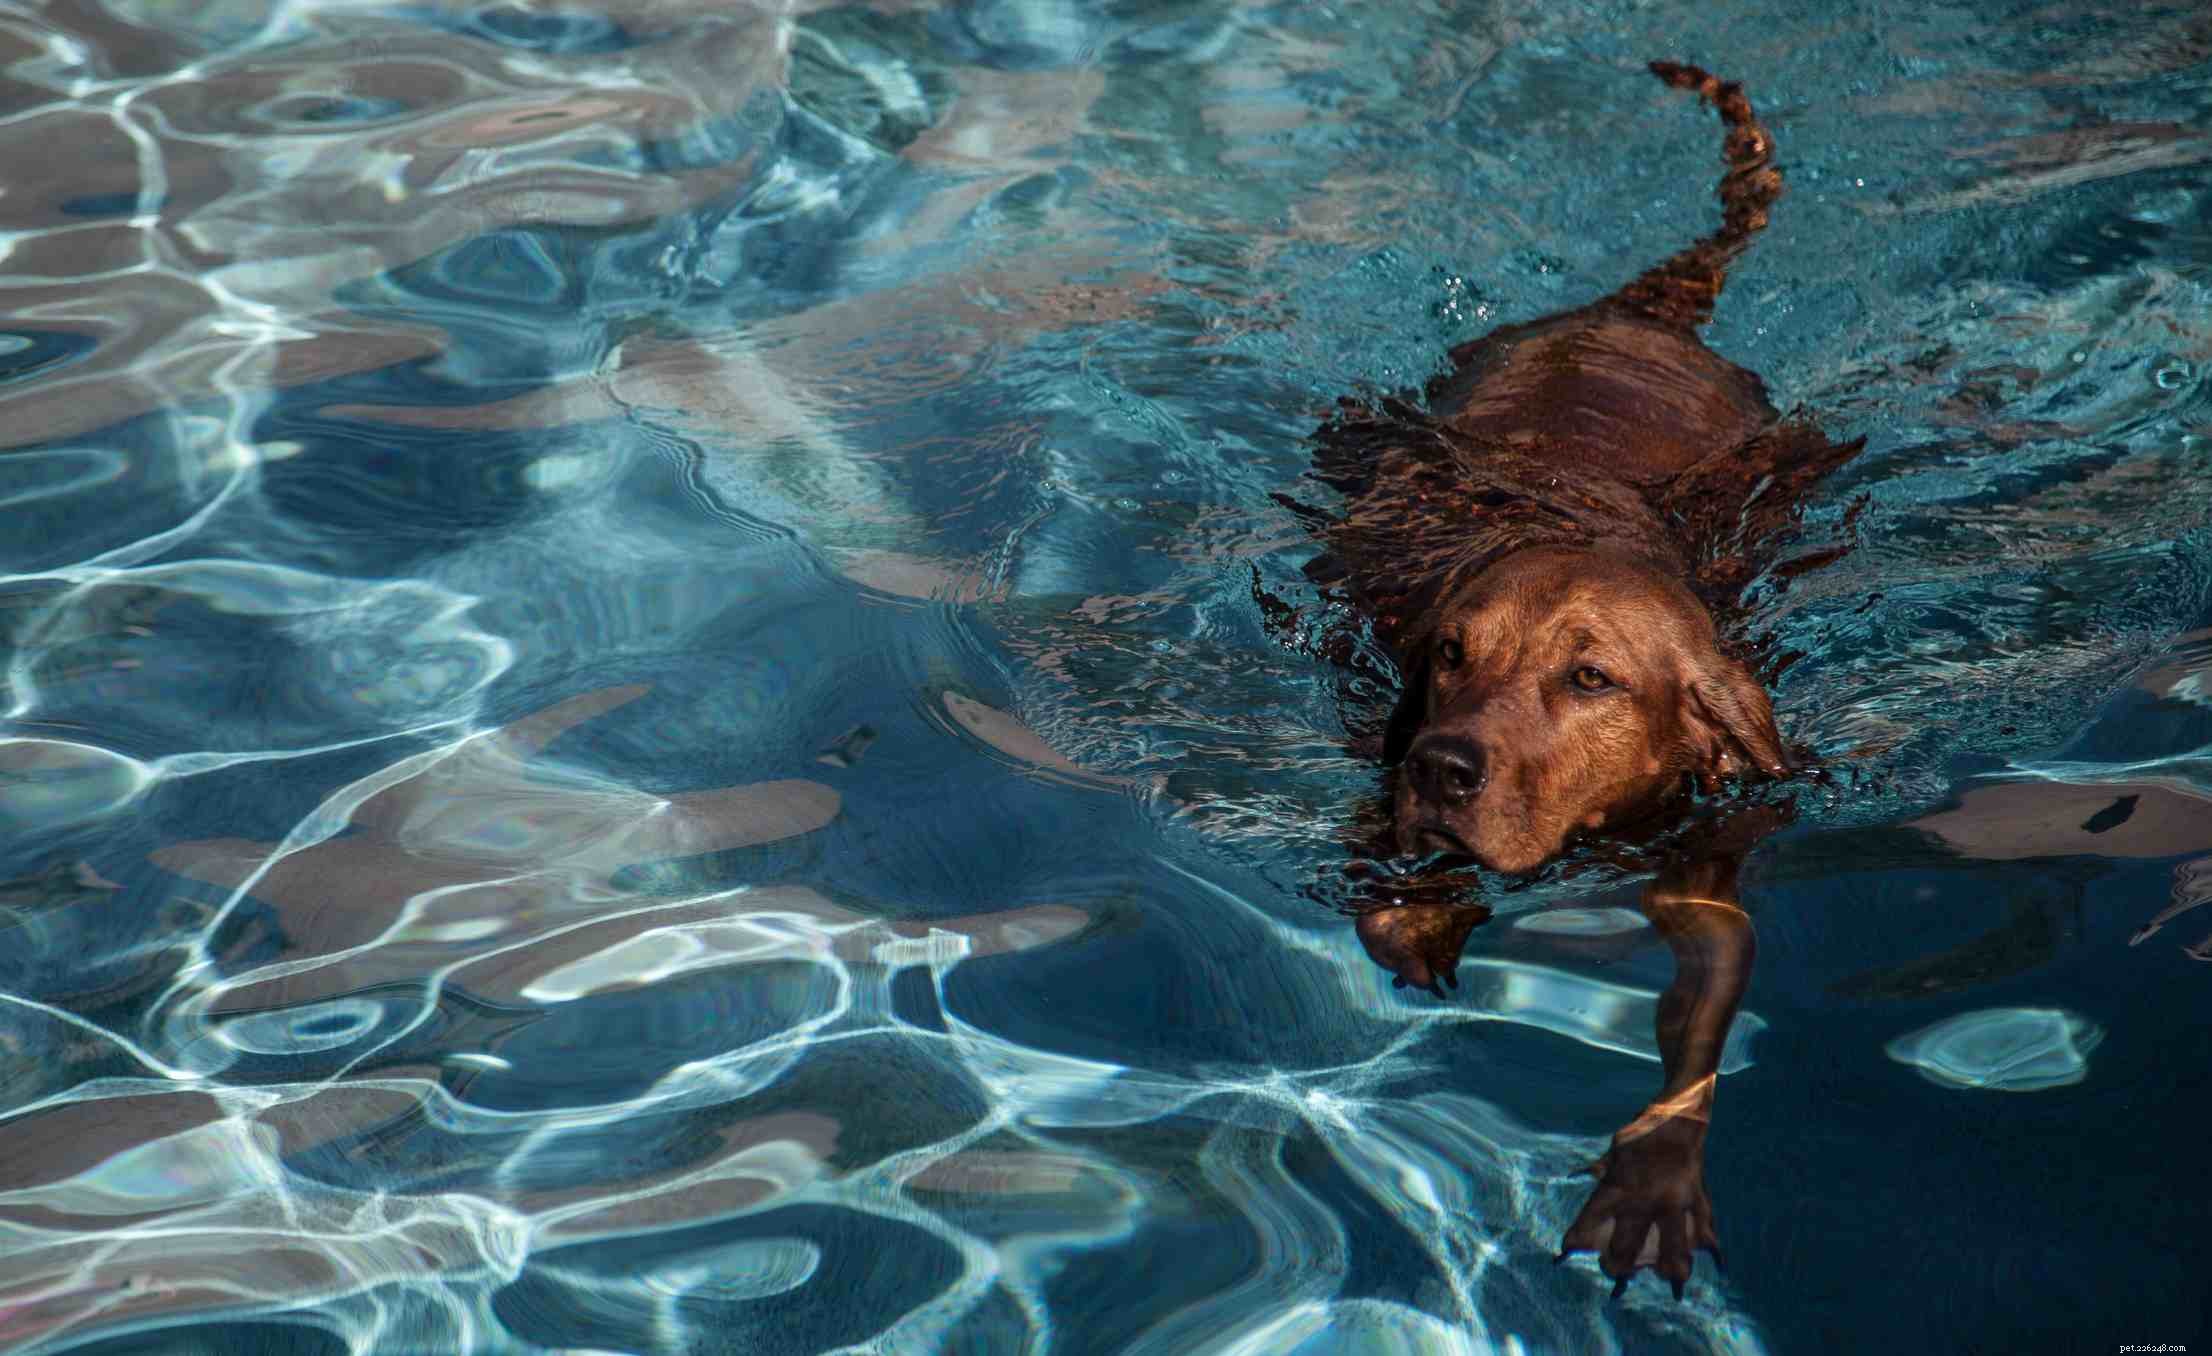 Redbone Coonhound:개 품종 특성 및 관리 